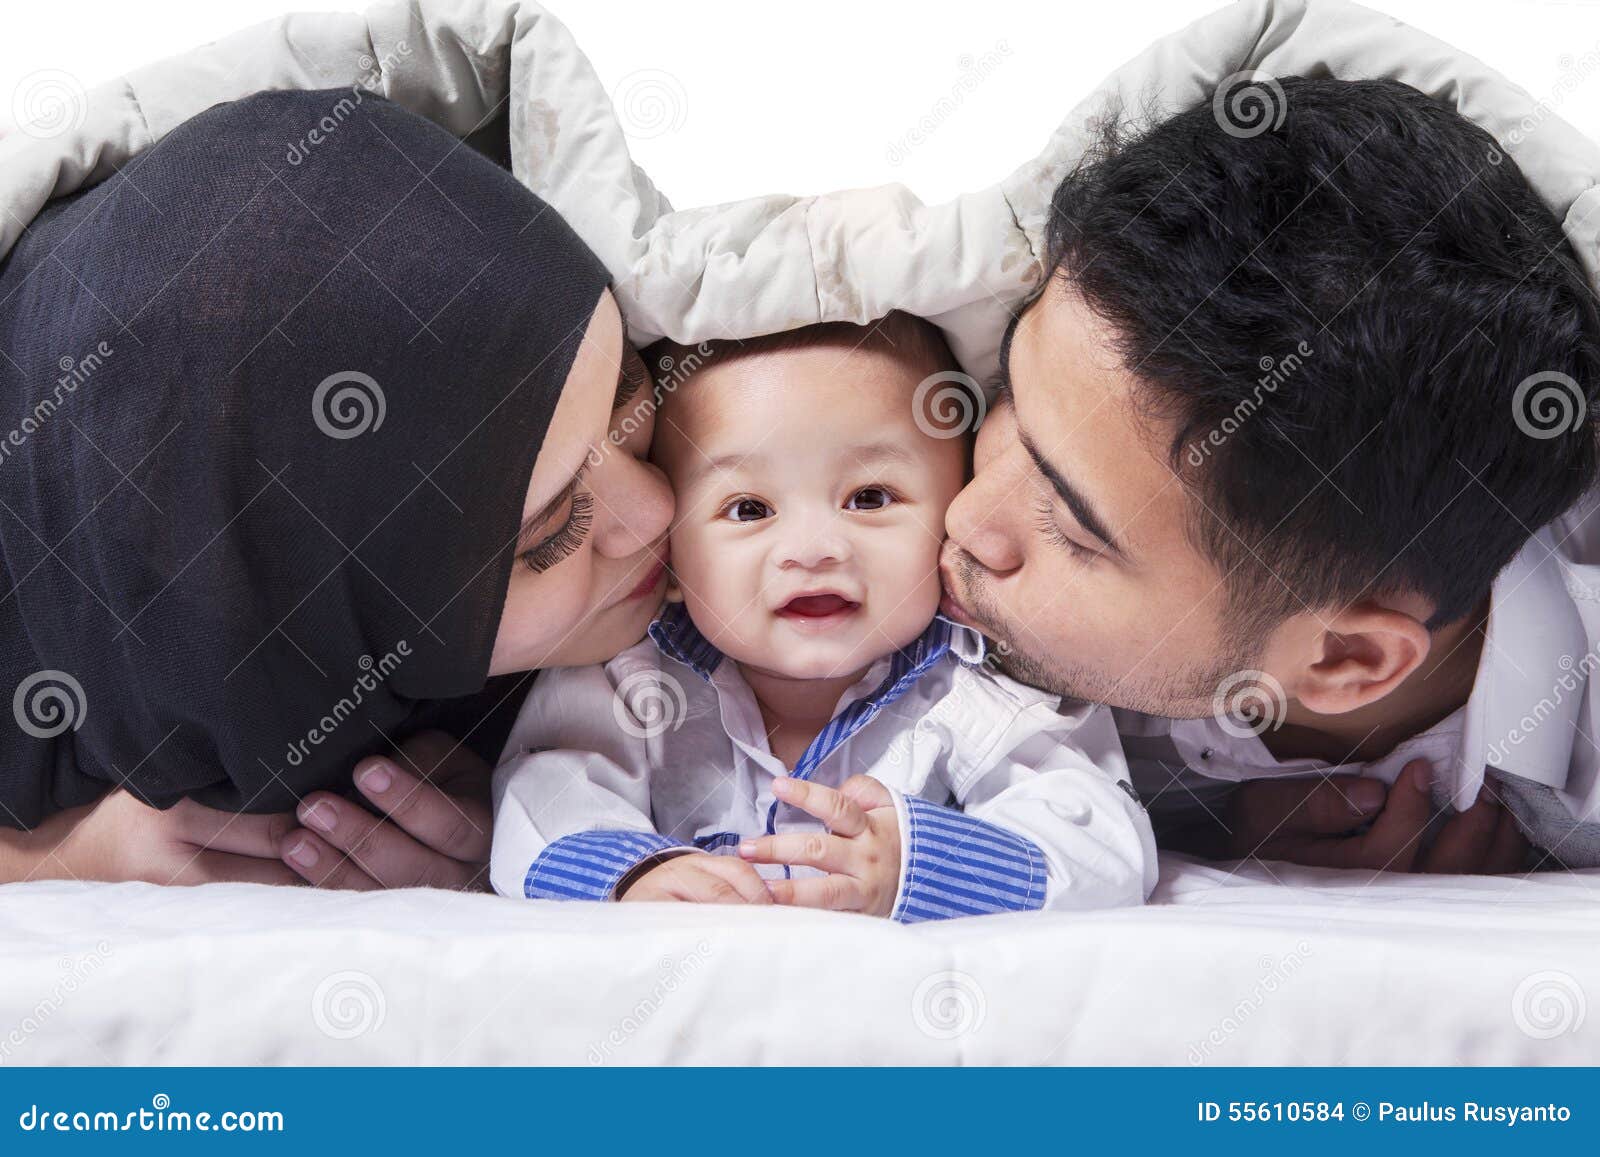 Attractive Baby Under Blanket With Parents Stock Photo Image Of Happy Indoors